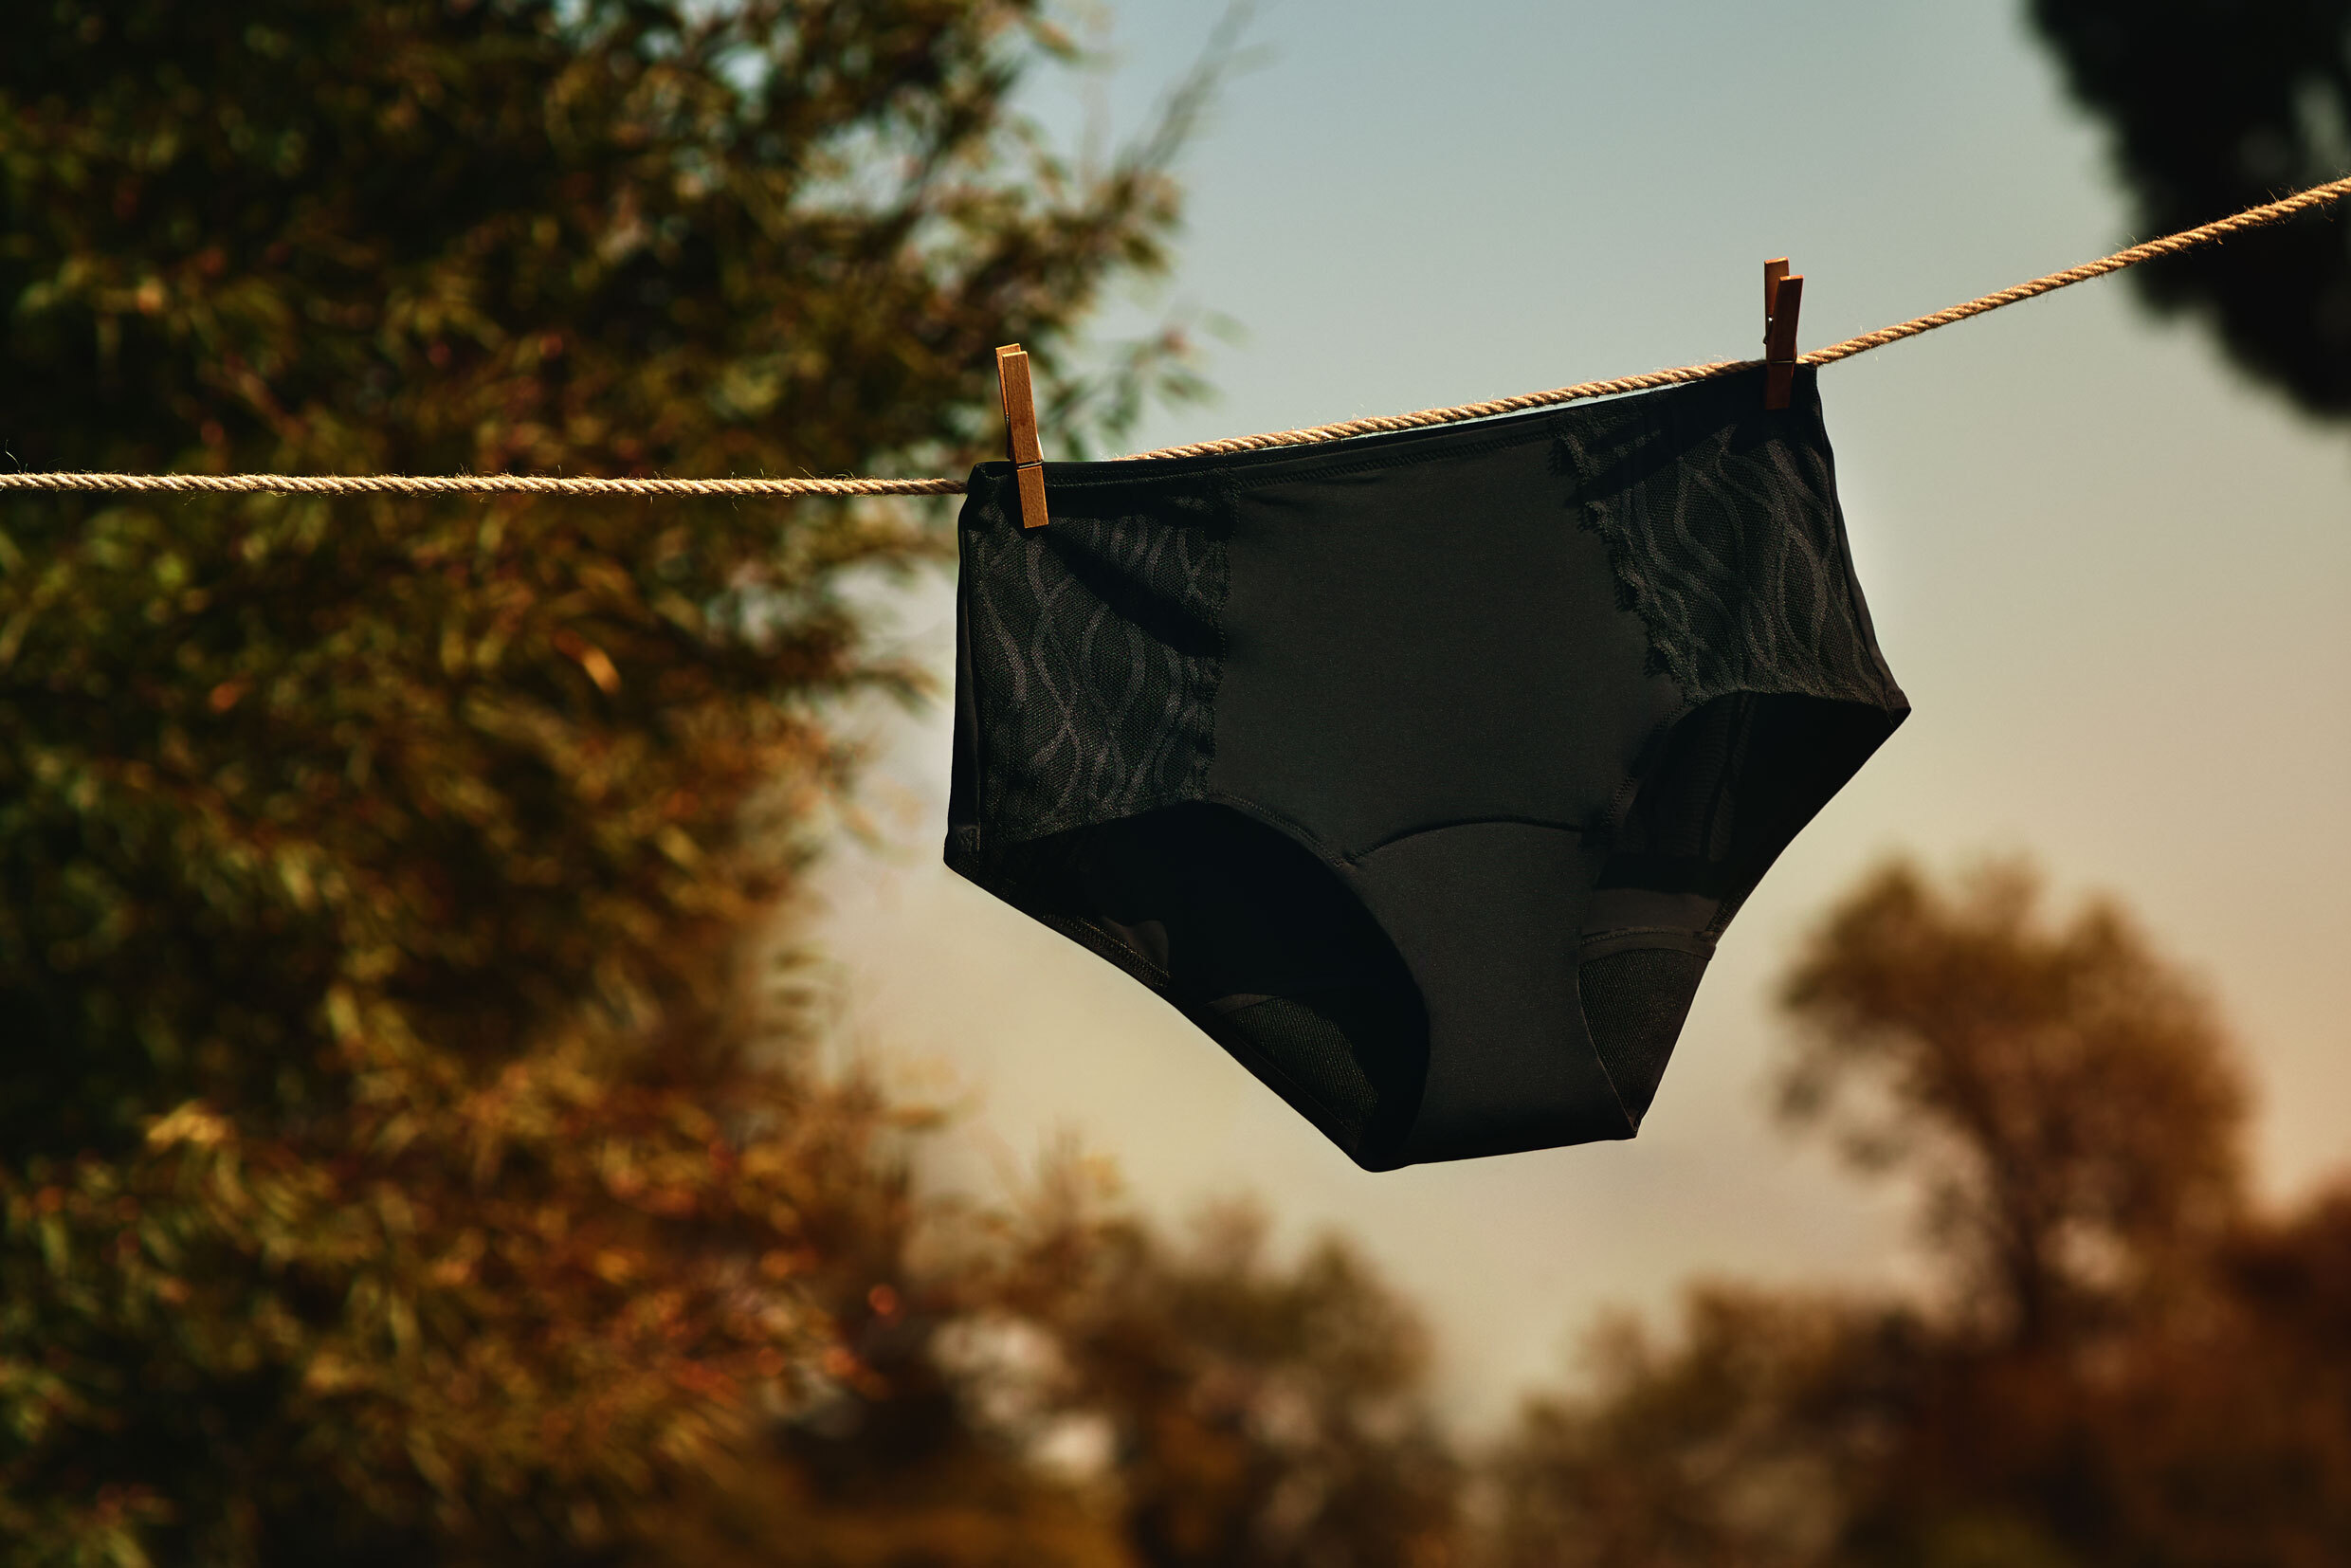 https://centradaemsi.pt/wp-content/uploads/2021/10/TENA-Silhouette-Washable-Absorbent-Underwear-Key-Visual-Washing-Line-Classic-art.jpg